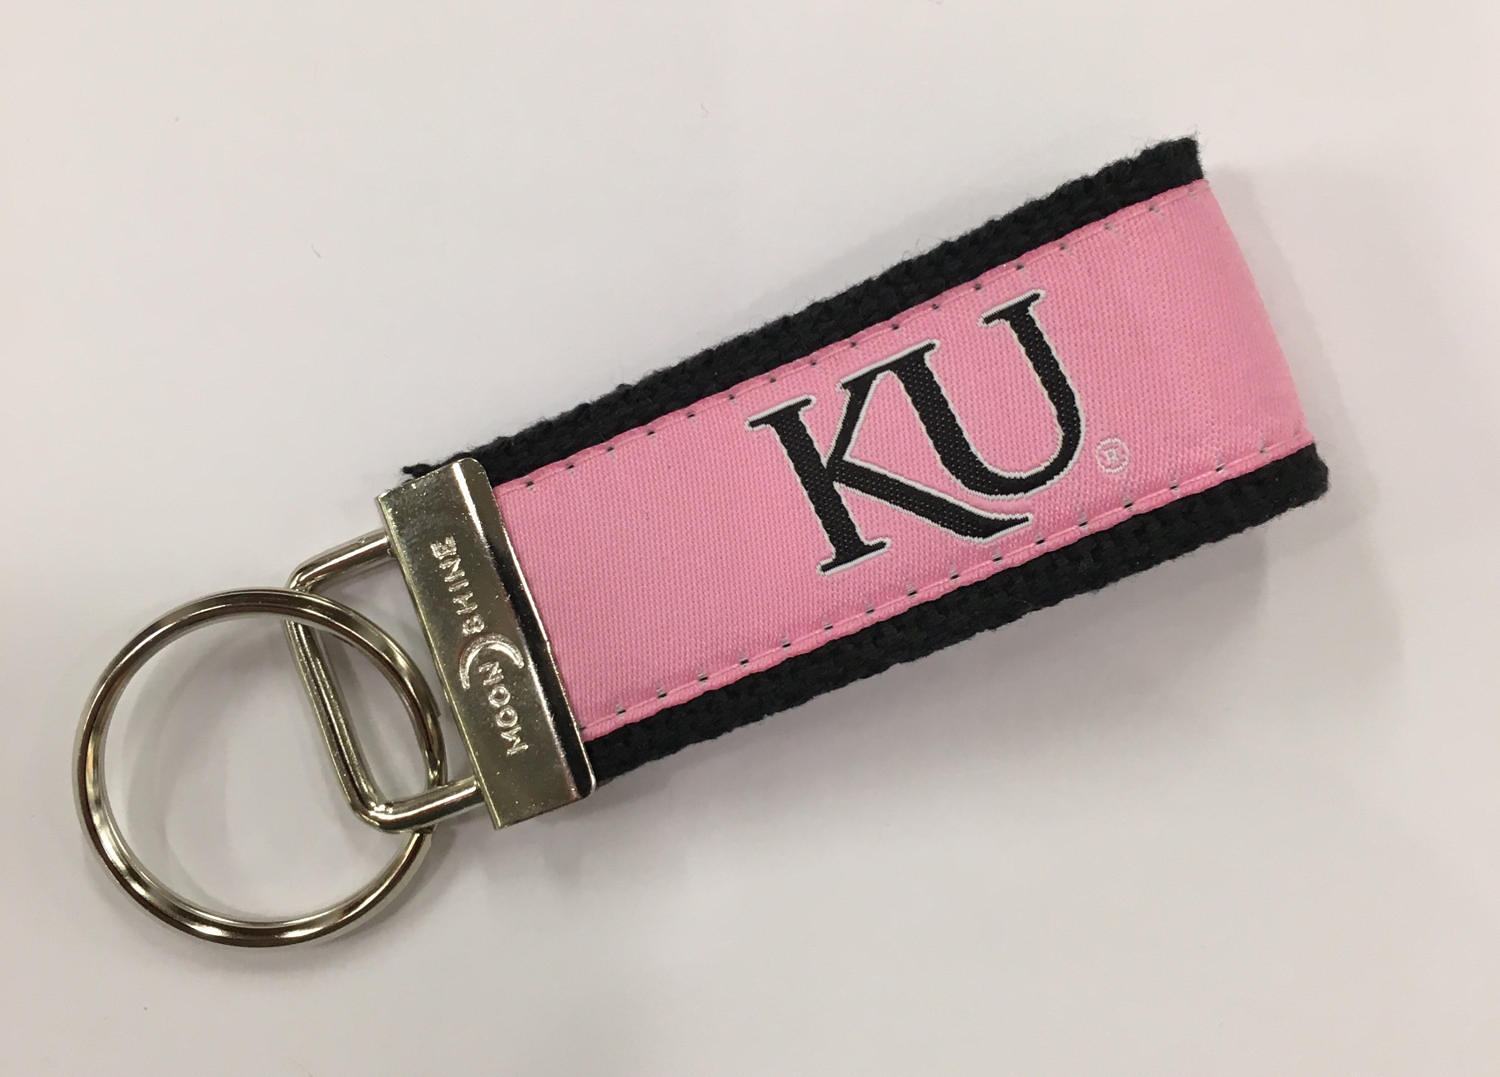 University of Kansas licensed web key chain